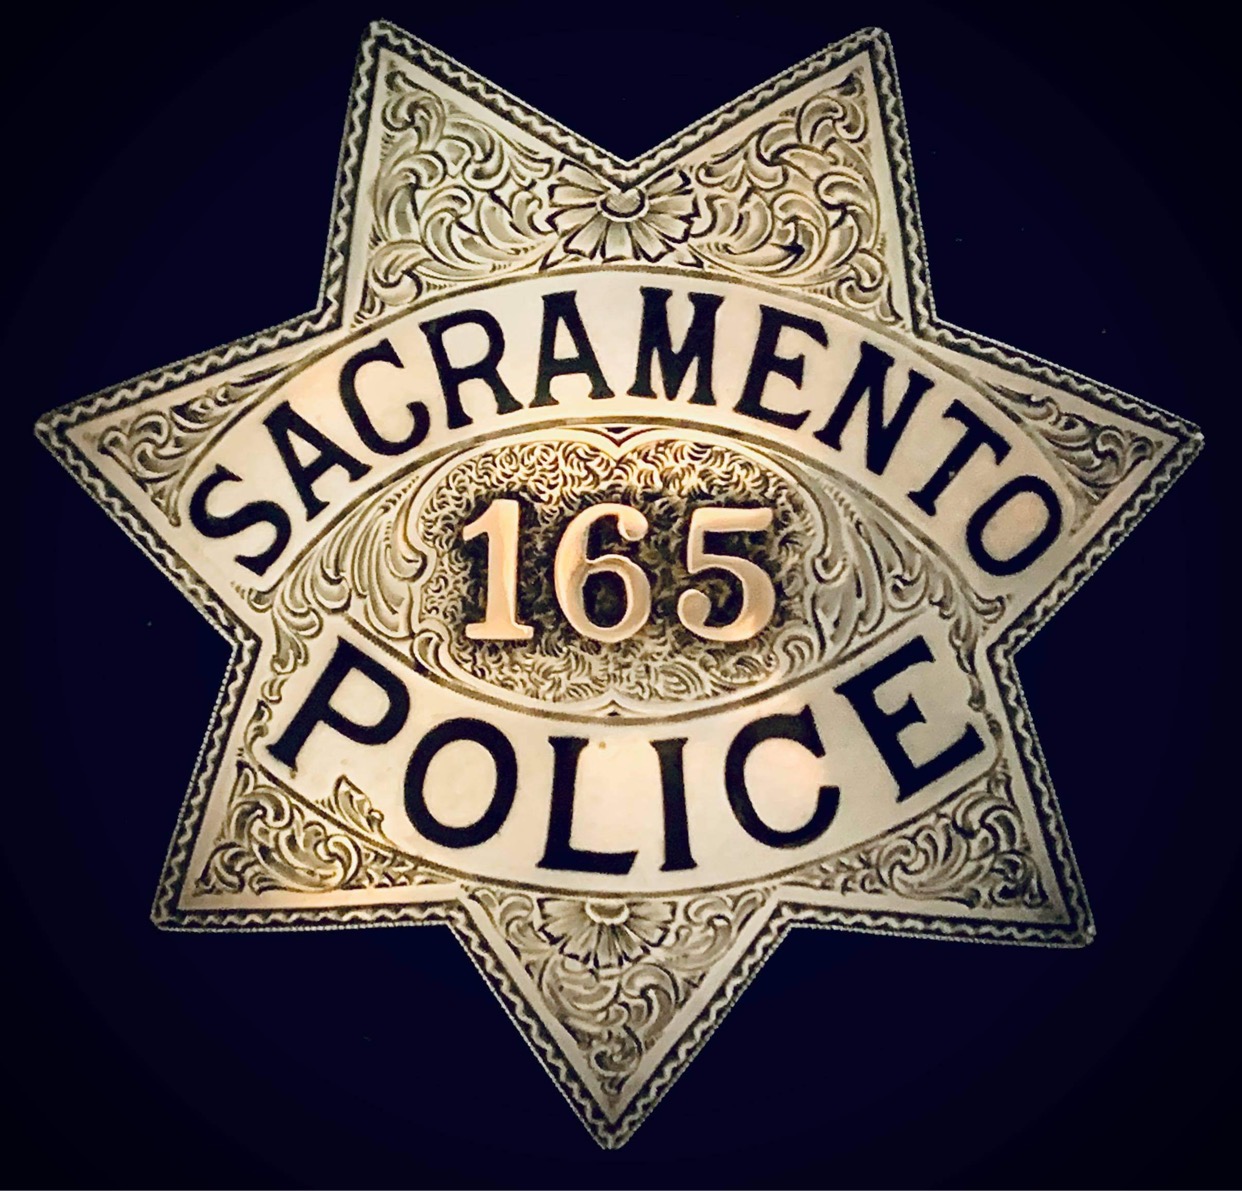 Engraved sterling silver Sacramento, CA police badge #165.�